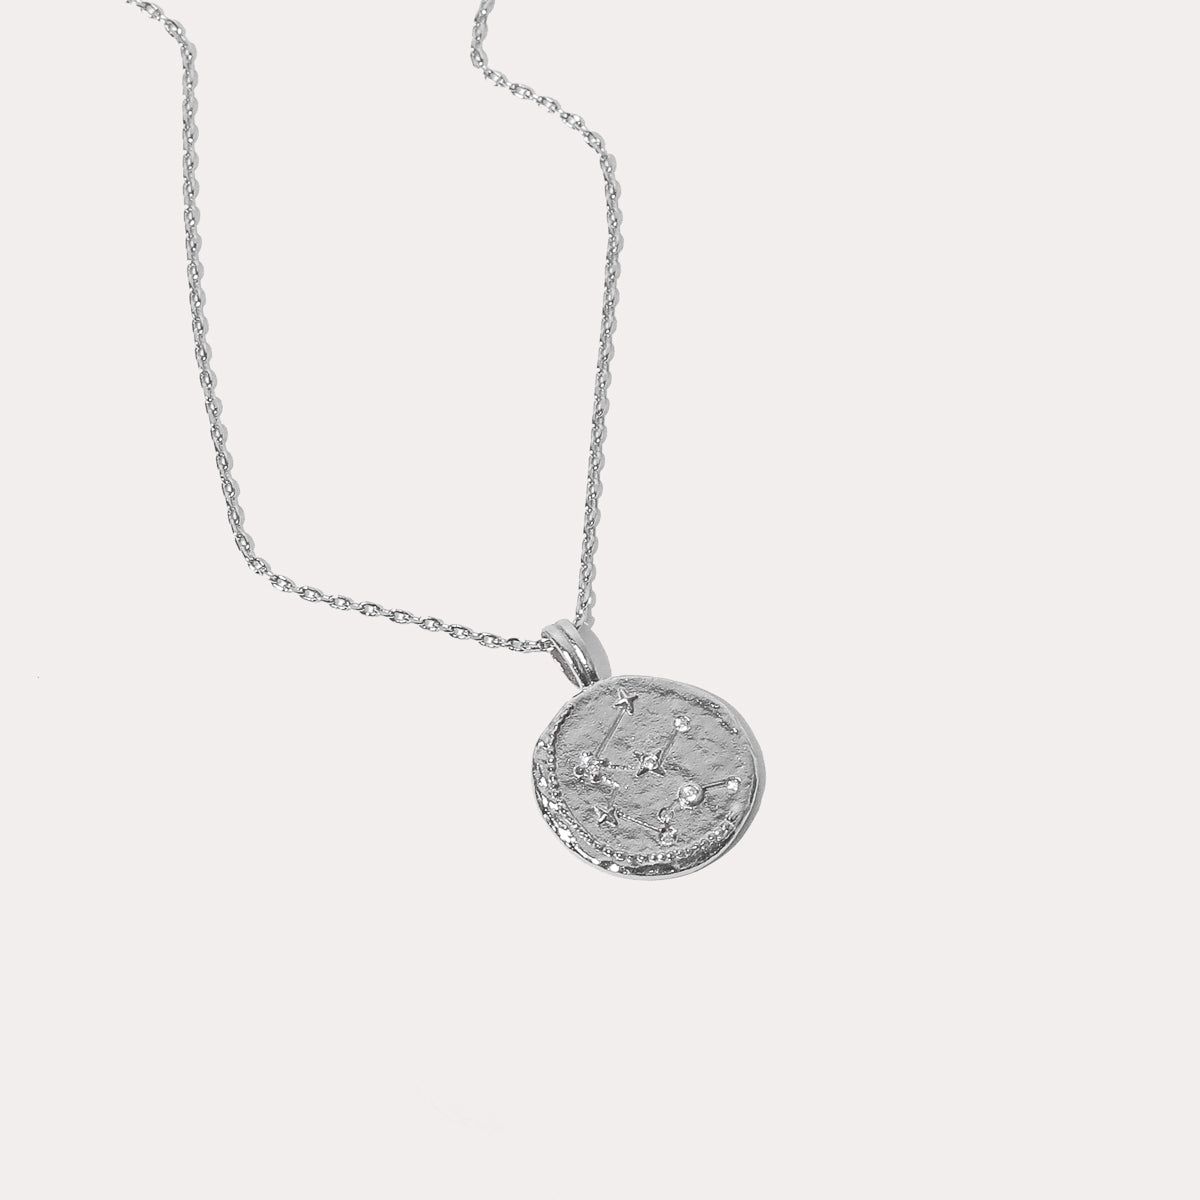 Buy Preciously Mine 925 Sterling Silver Aquarius Zodiac (Jan20-Feb18)  Pendant (GoldPolish) at Amazon.in